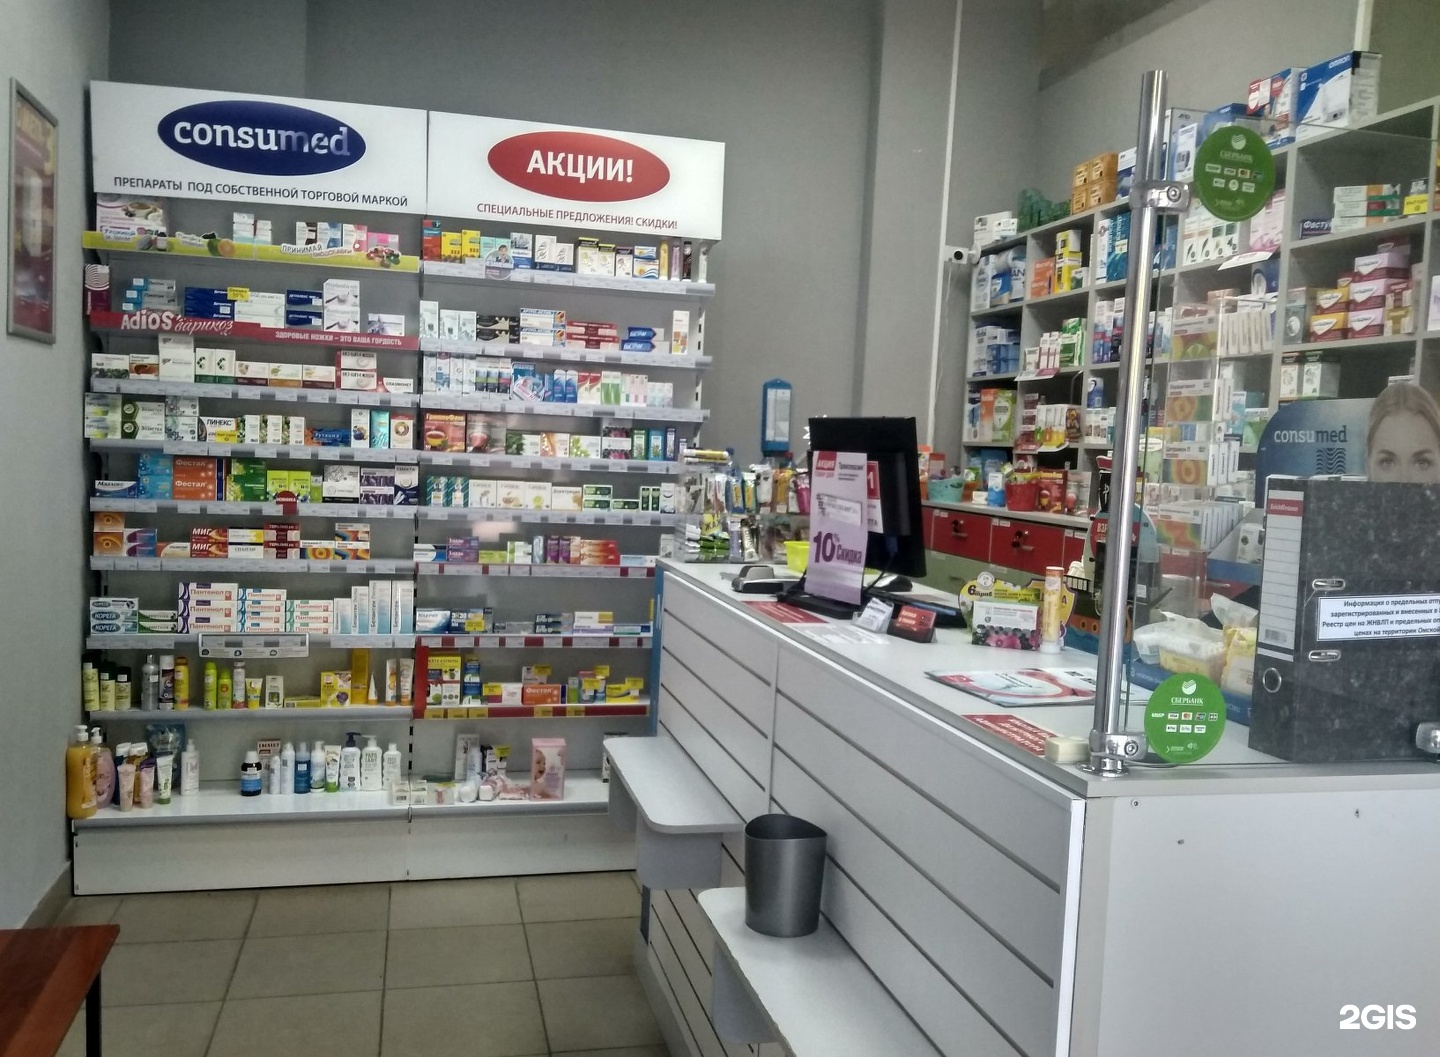 Омск каталог лекарств цены